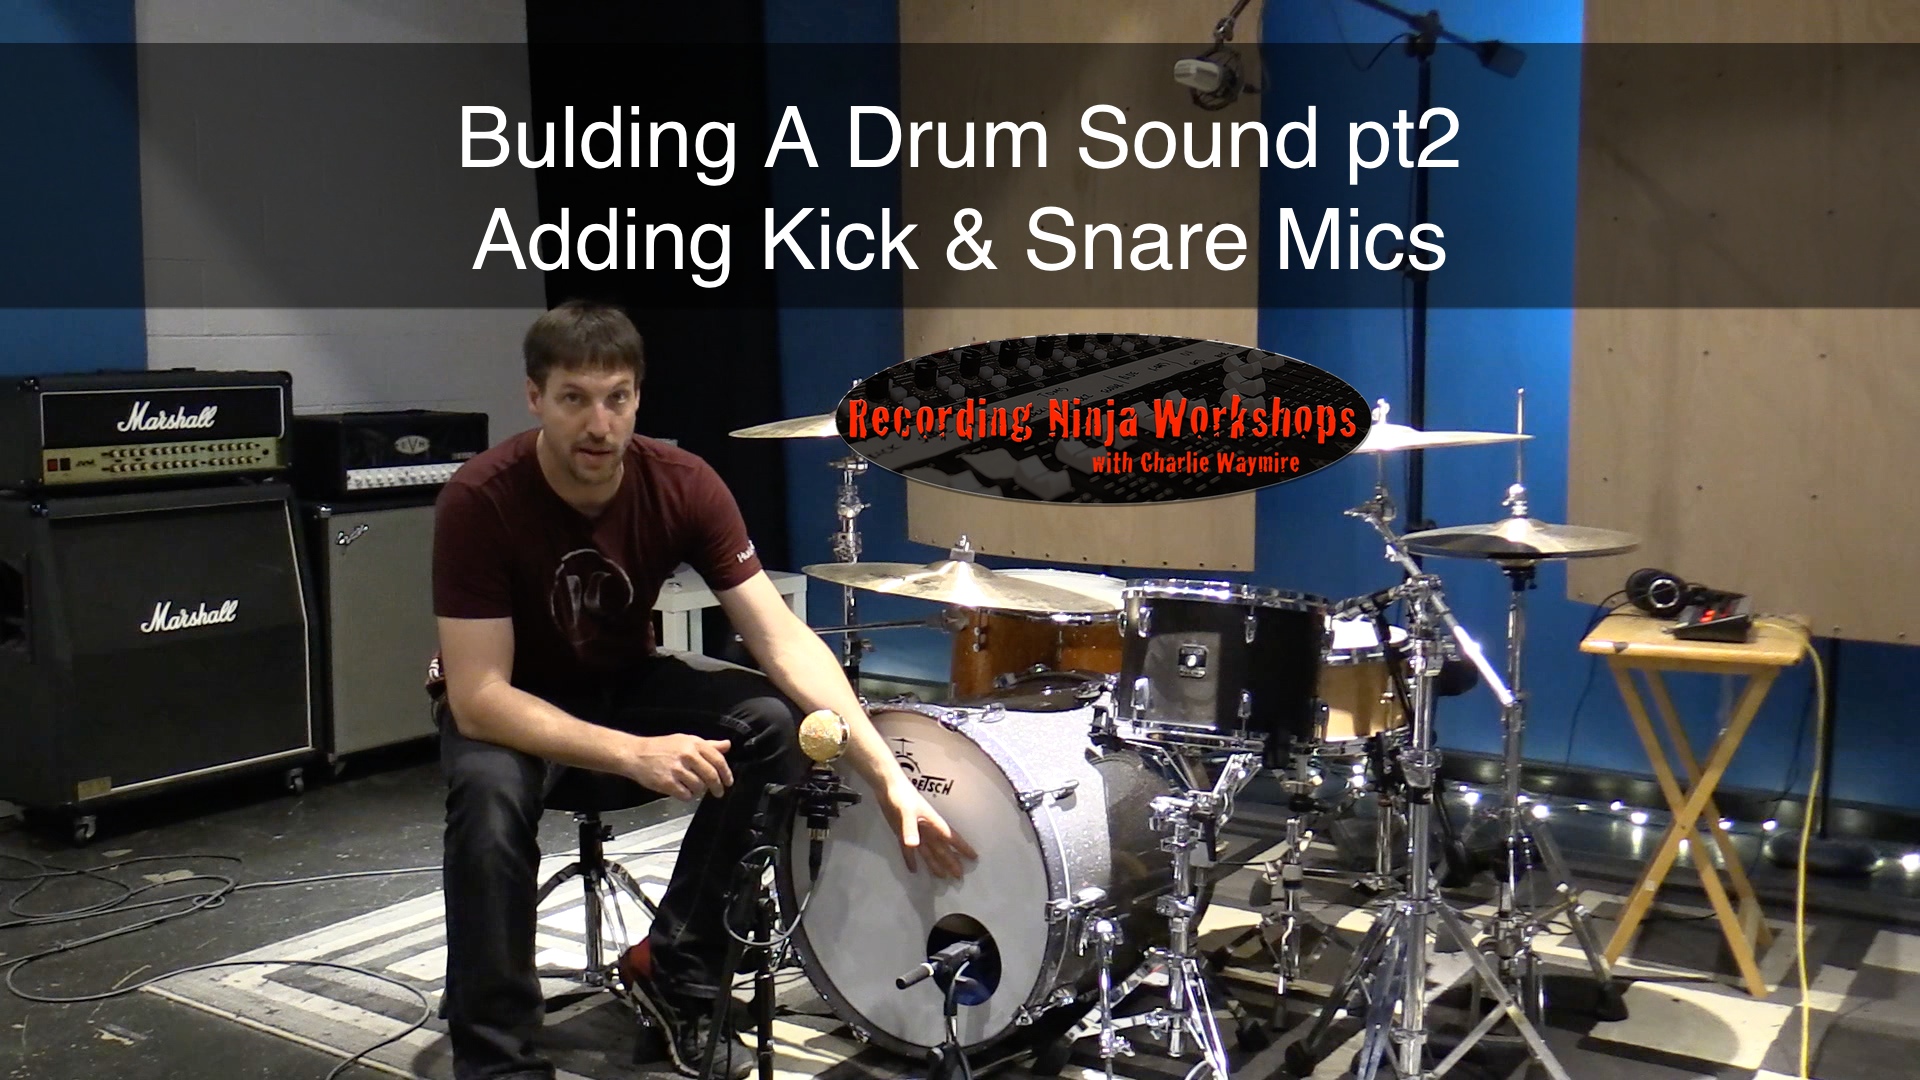 Building A Drum Sound pt2 Is Up!